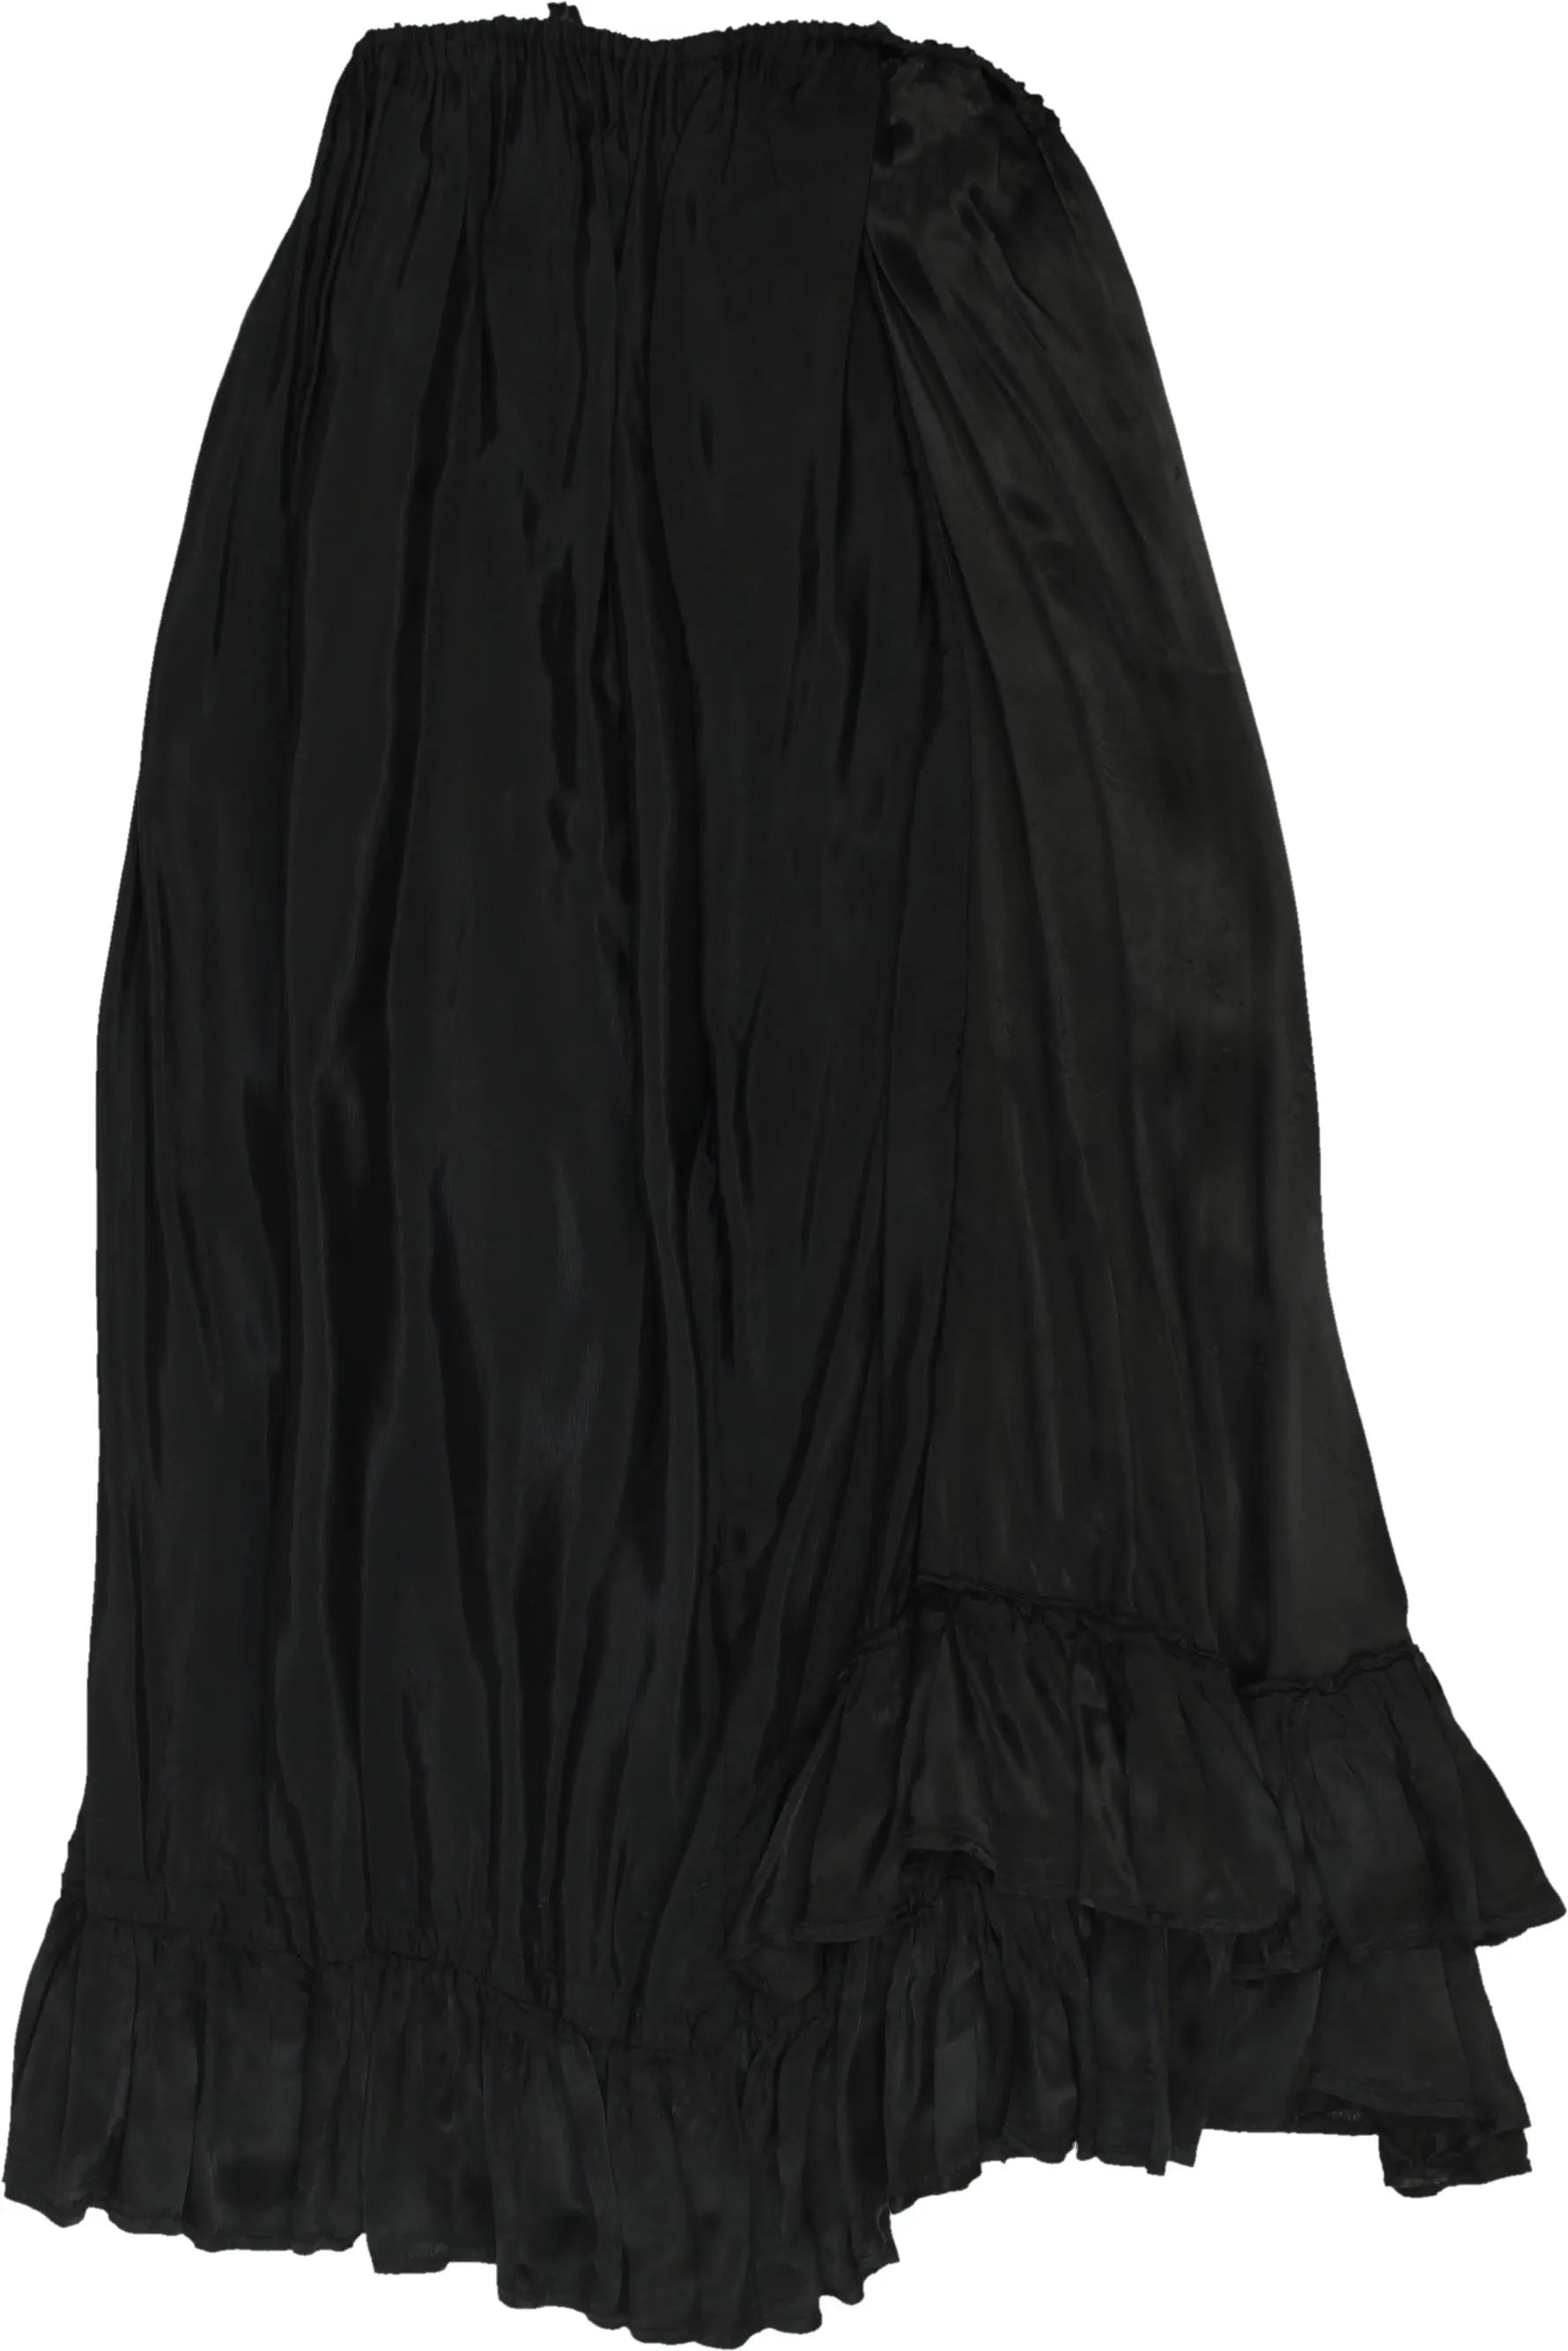 Handmade - Handmade Long Satin Ruffle Skirt- ThriftTale.com - Vintage and second handclothing